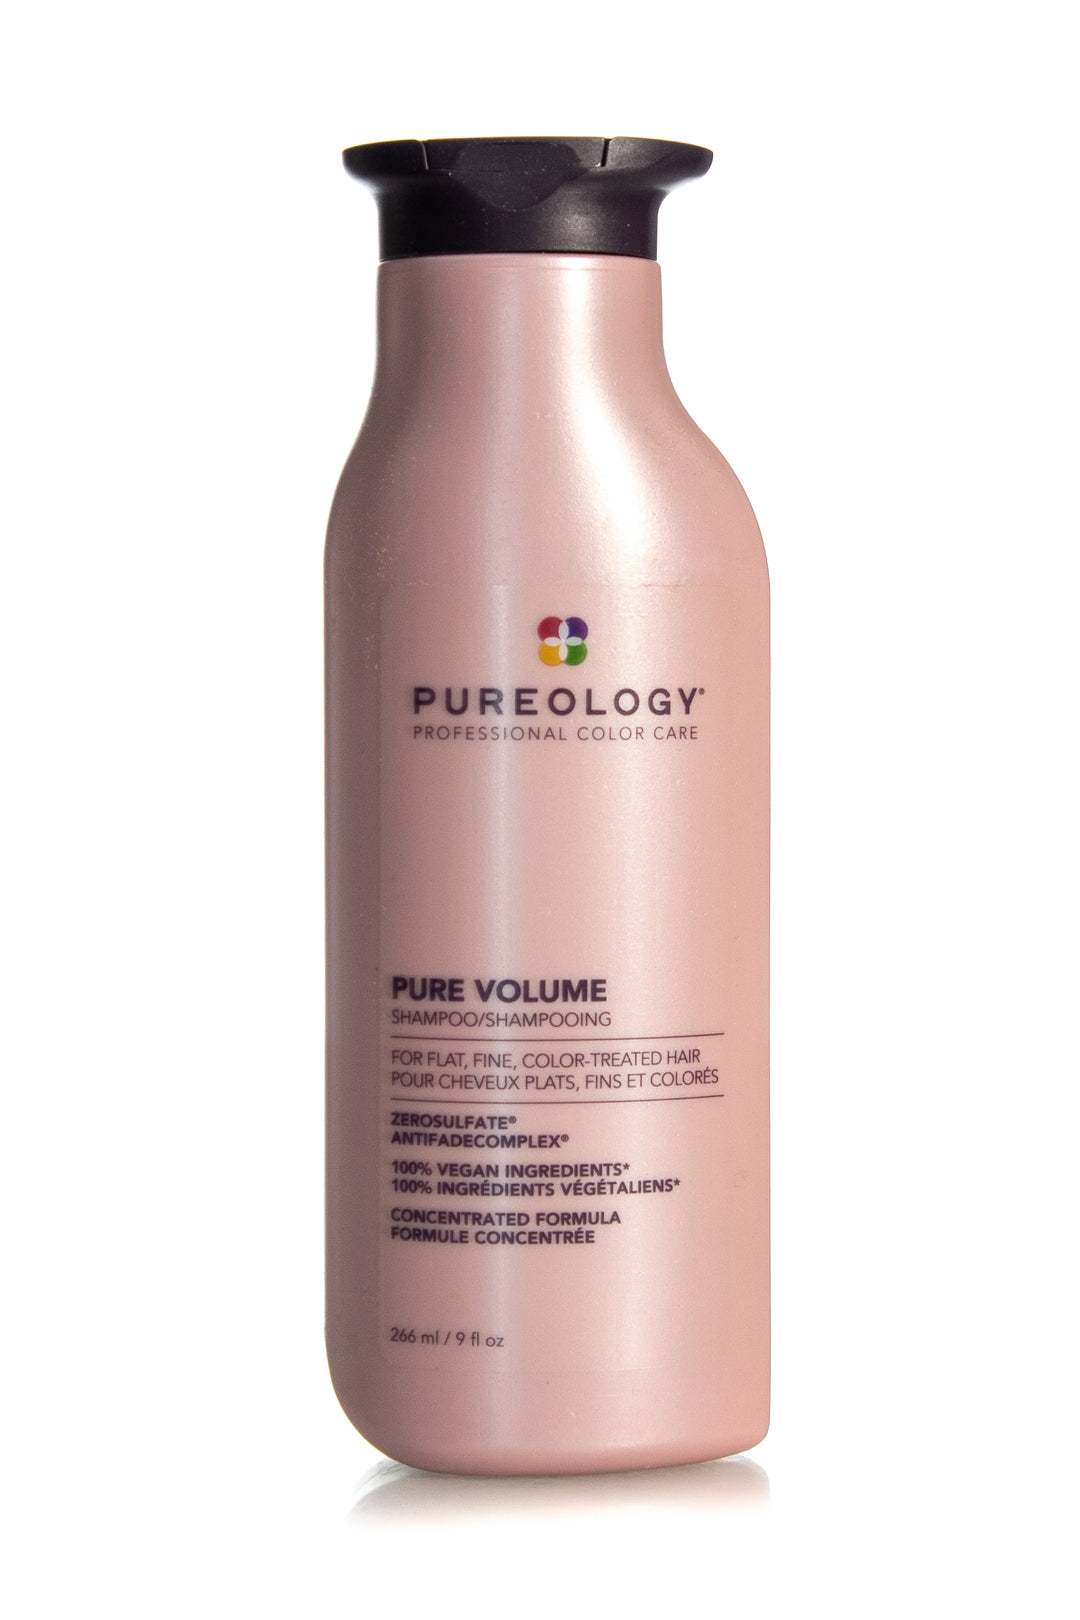 PUREOLOGY Pure Volume Shampoo | 266ml